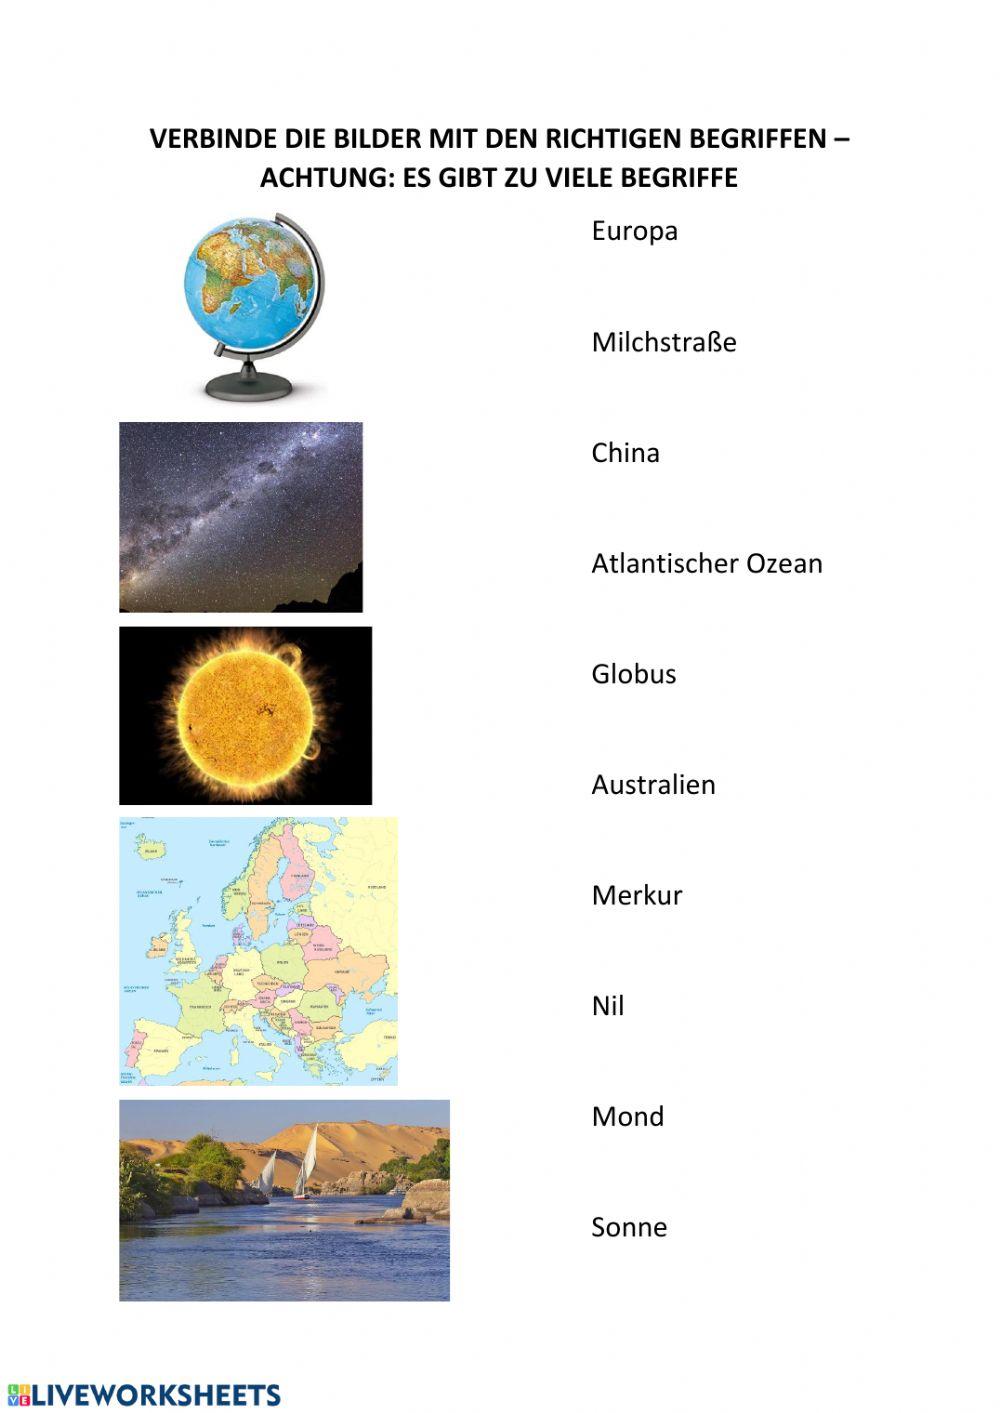 Geographie: gemischt, Welt + Europas Hauptstädte